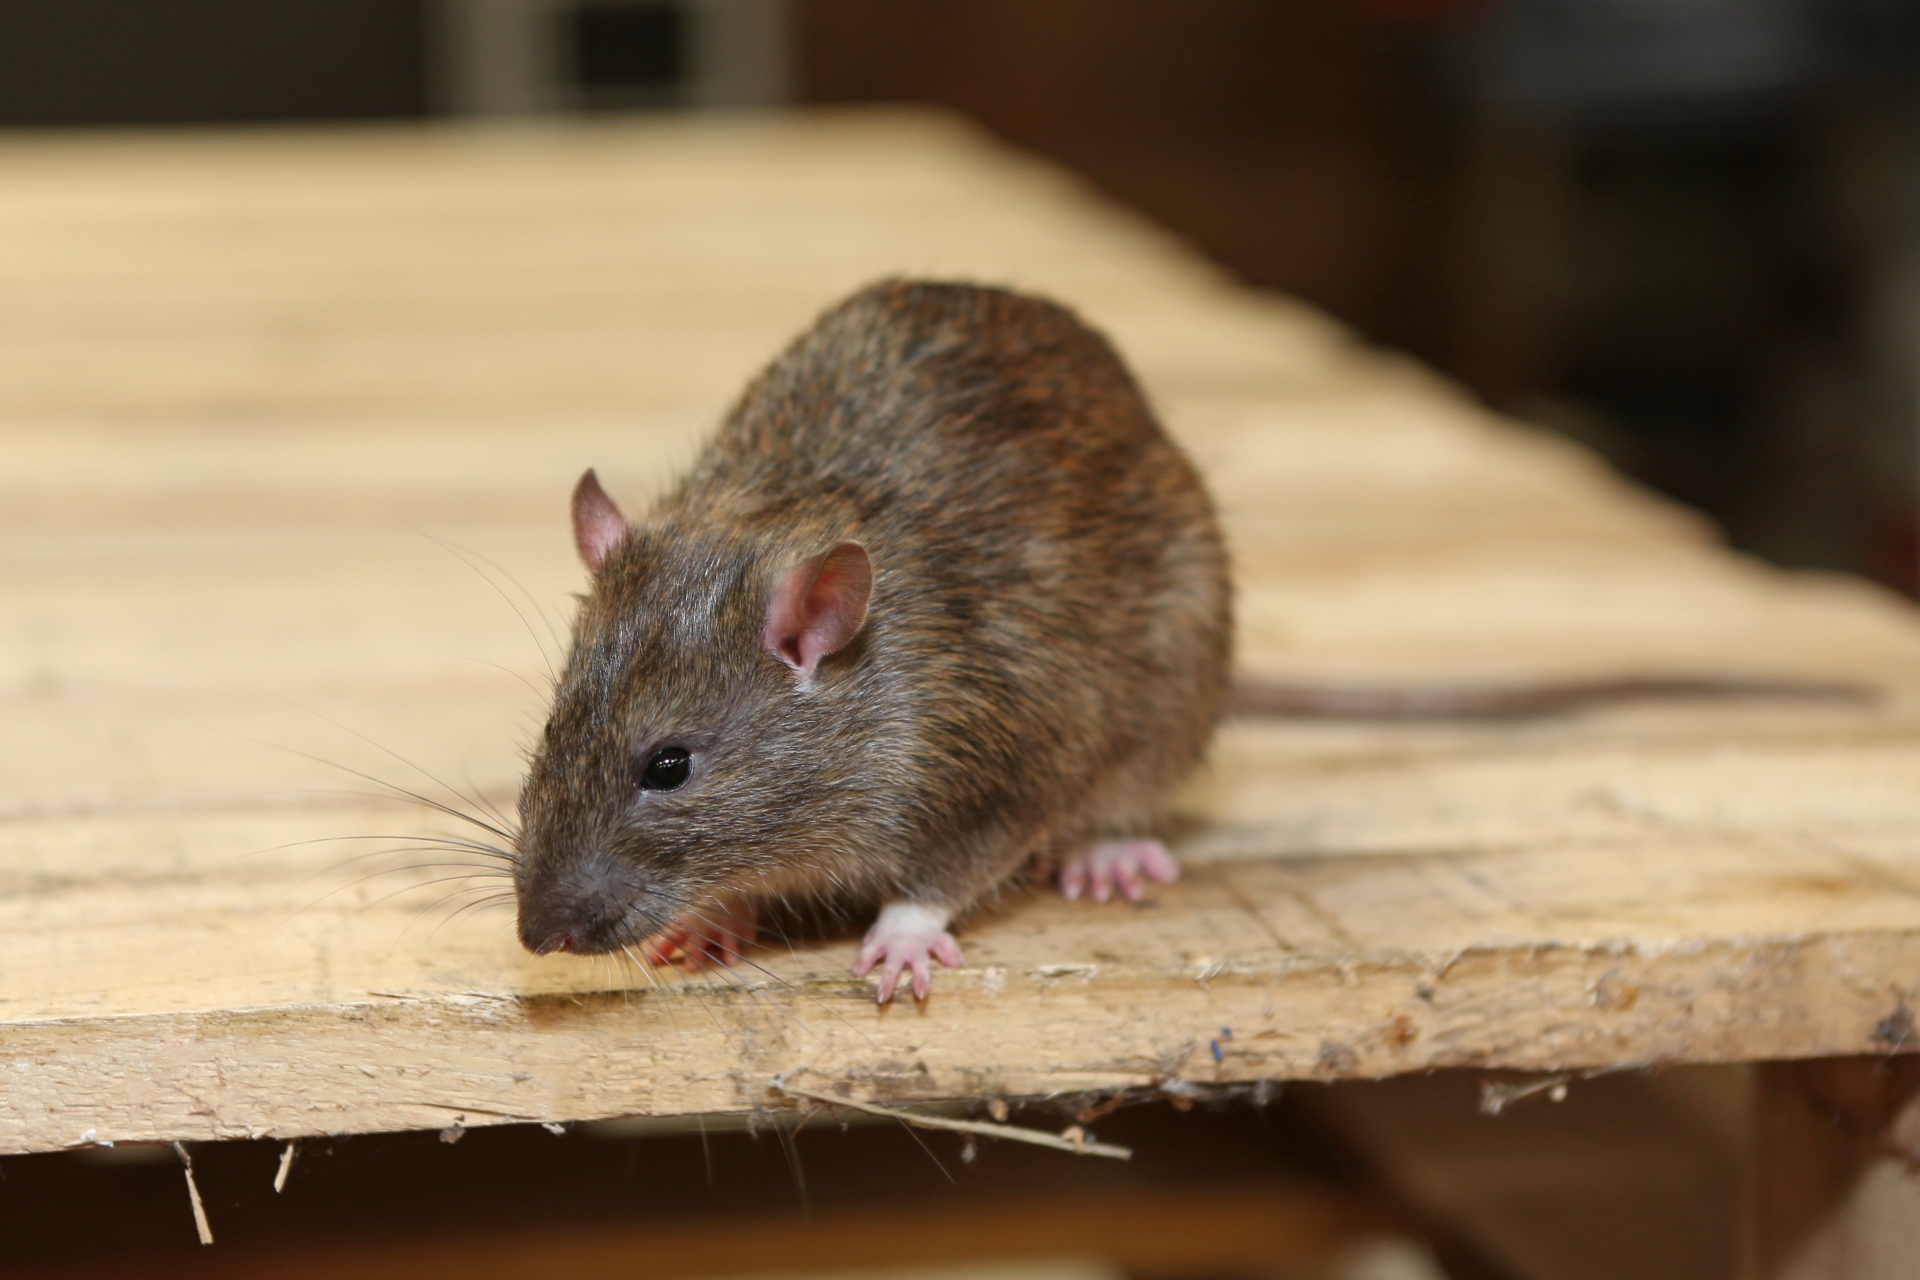 Rat extermination, Pest Control in South Croydon, Sanderstead, Selsdon, CR2. Call Now 020 8166 9746